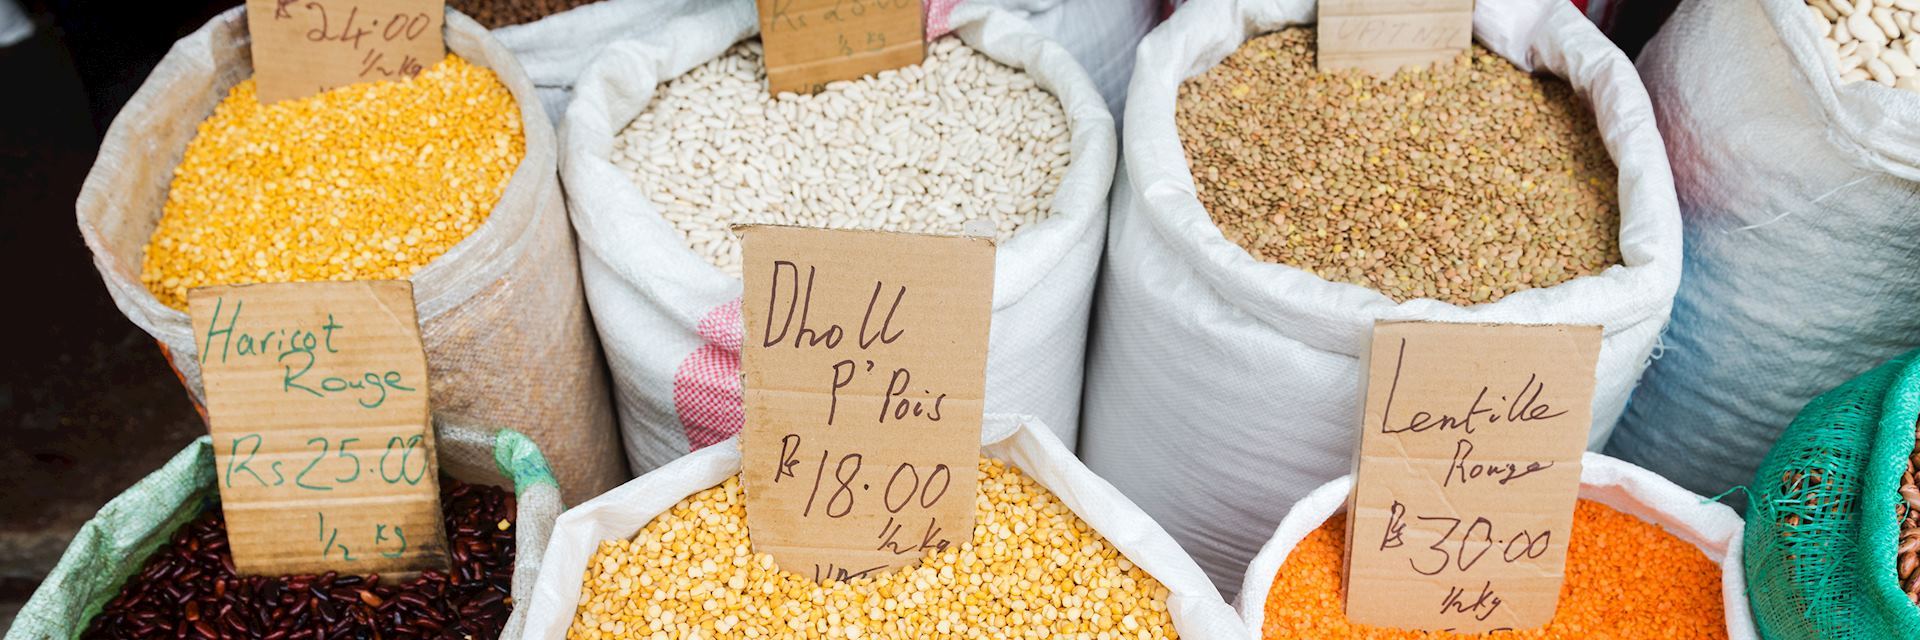 Grains and legumes for sale, Port Louis